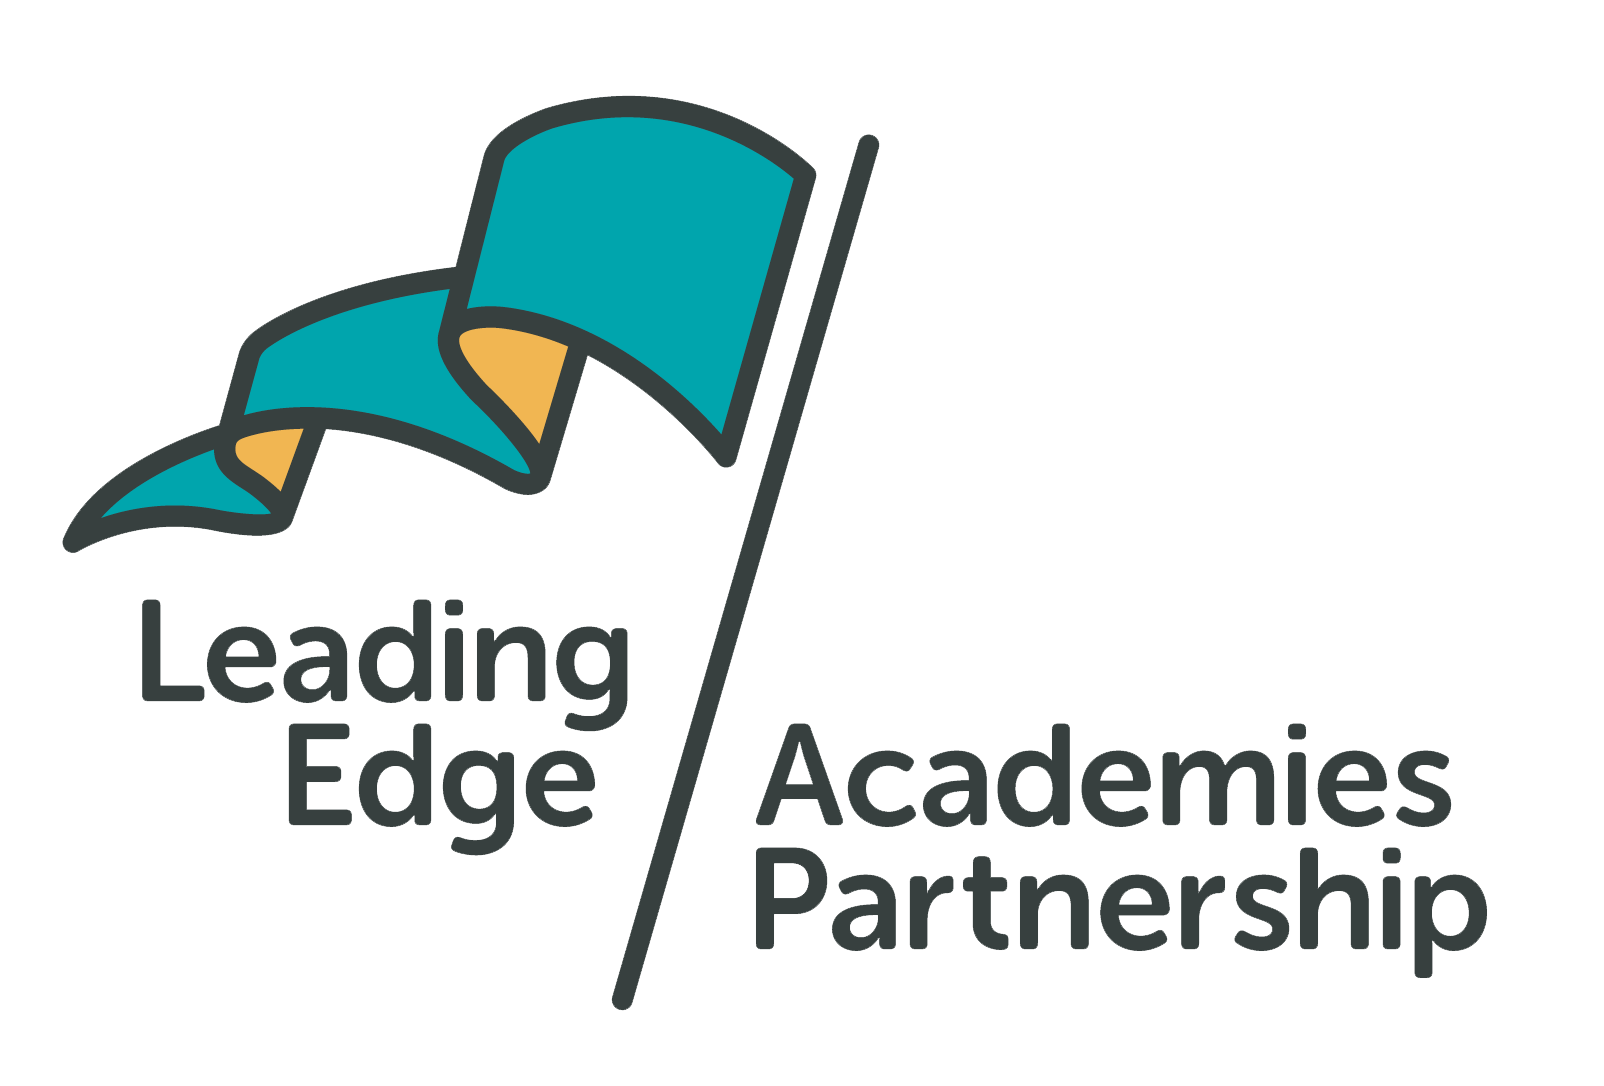 Leading Edge Academies Partnership